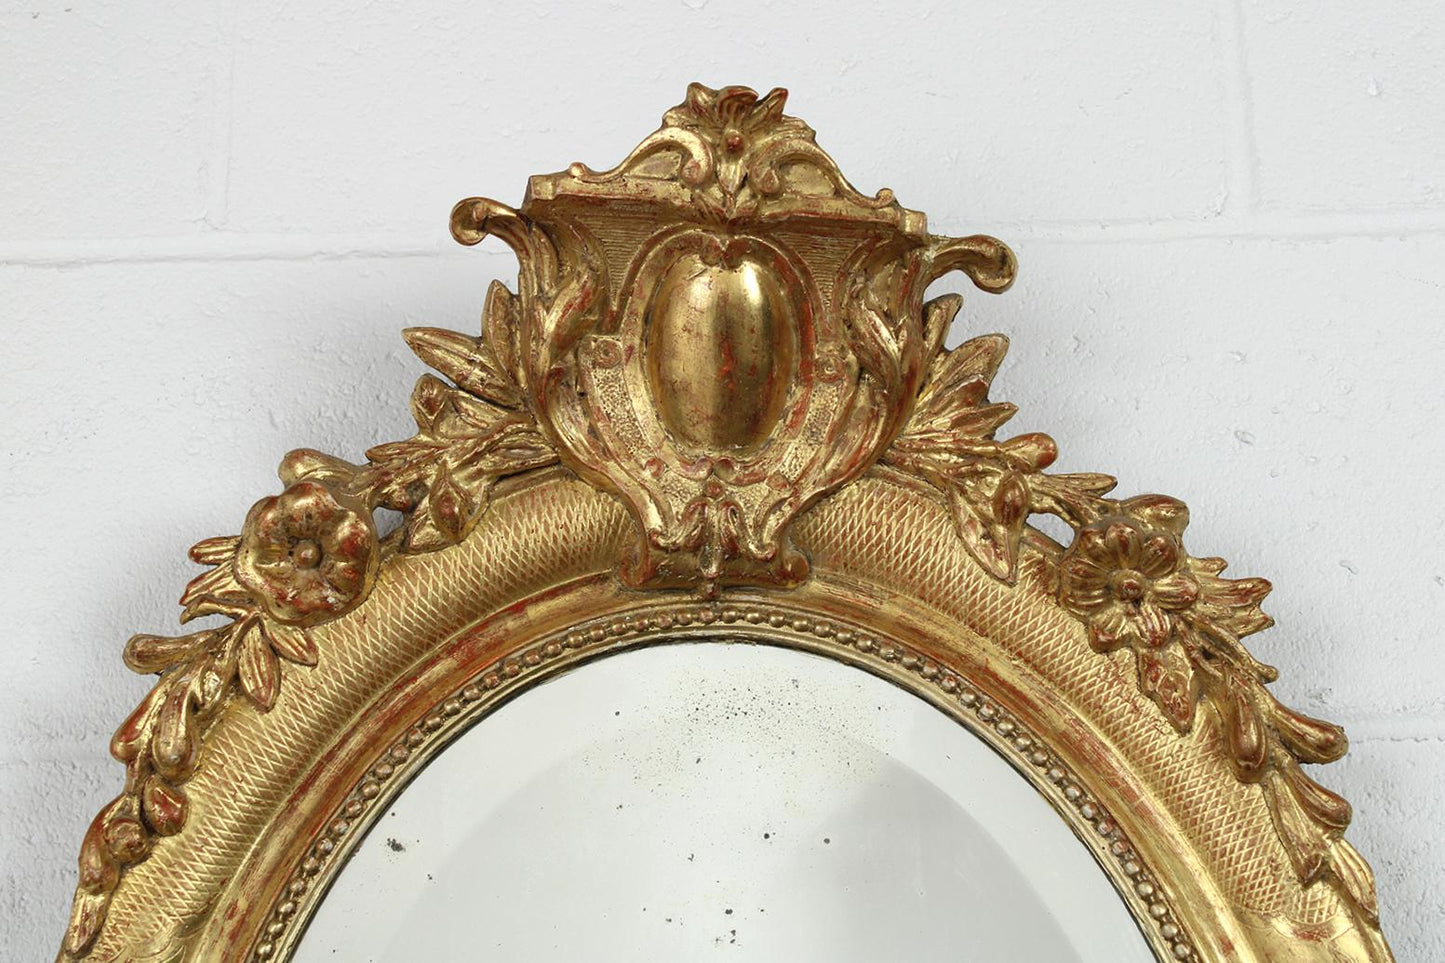 19th Century French Louis XVI Style Gilt Oval Mirror